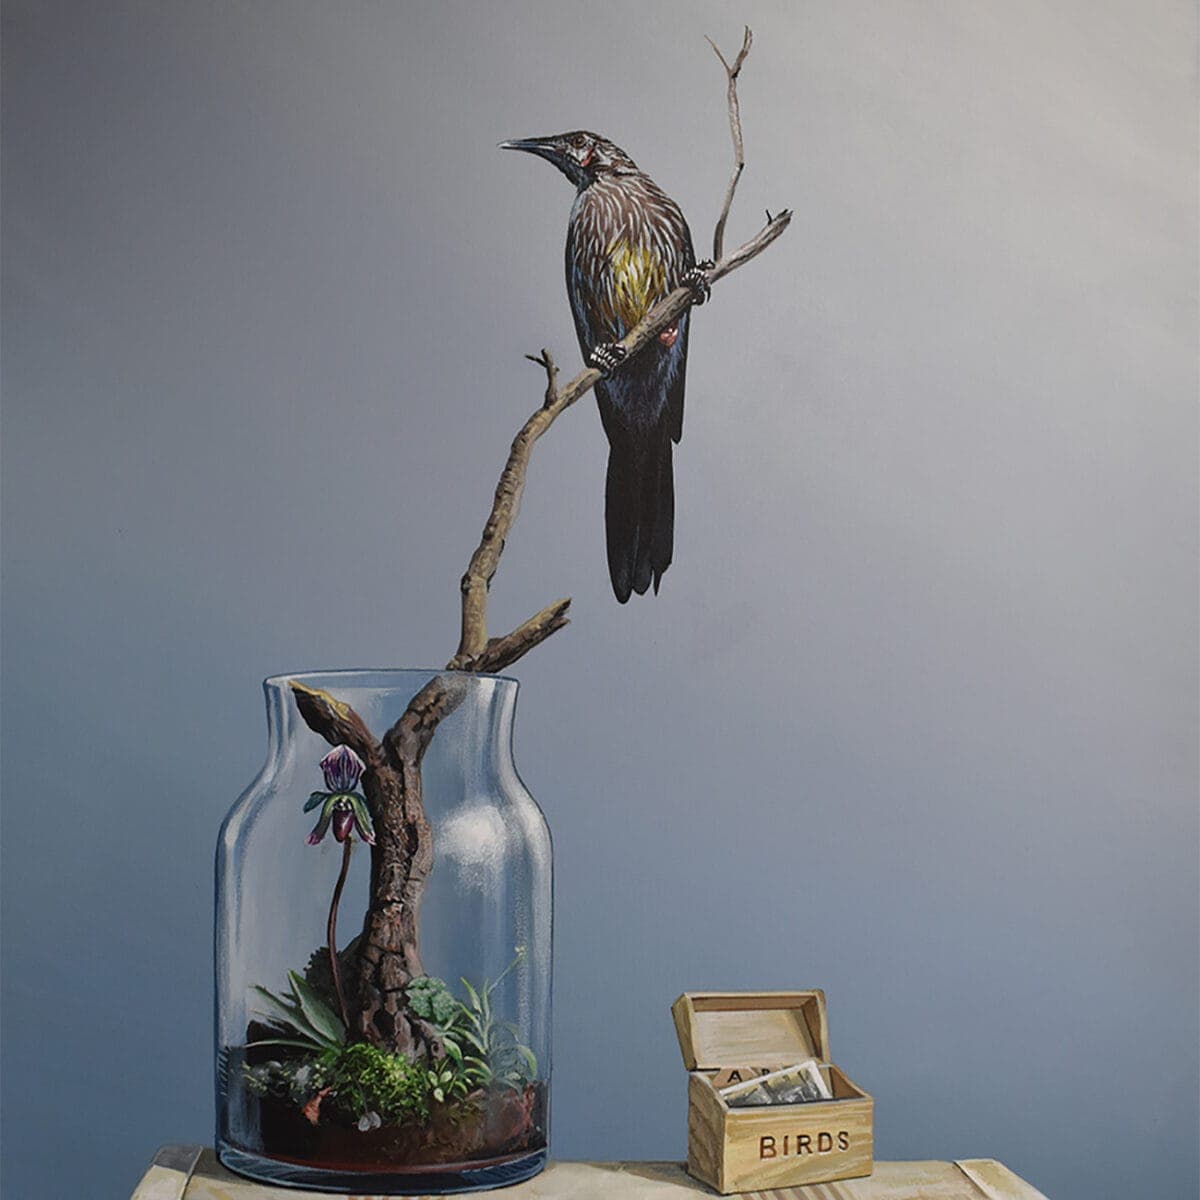 WEB Suitcase Wattle Bird 106.5 x 80cm acrylic on canvas